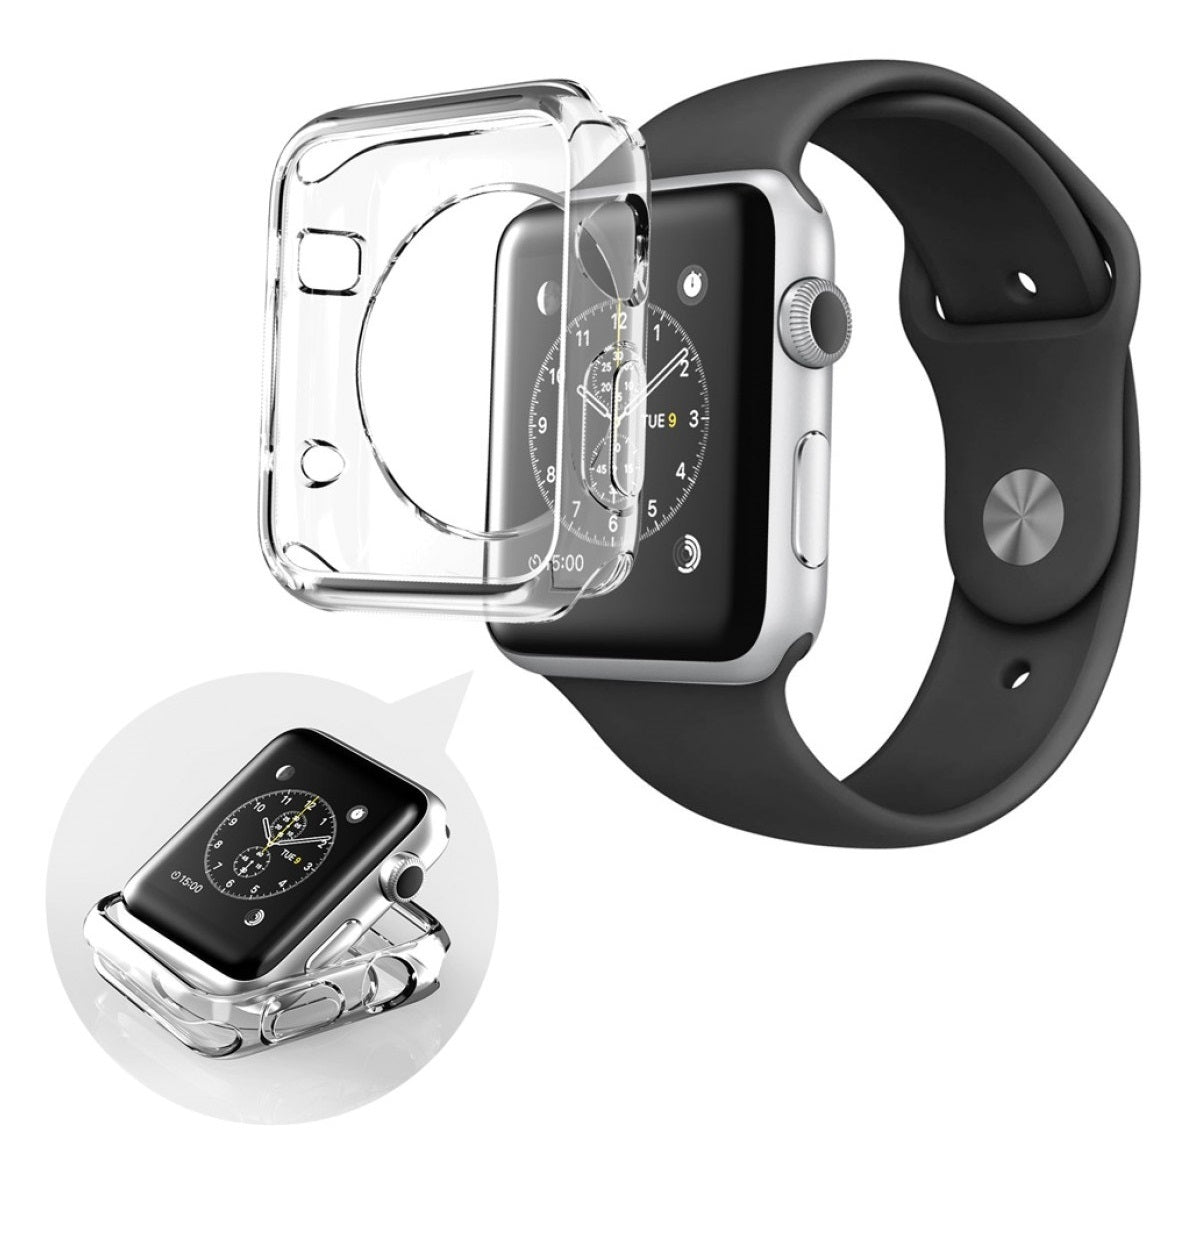 Capa Transparente Gel TPU Silicone para Apple Watch 38mm - Multi4you®